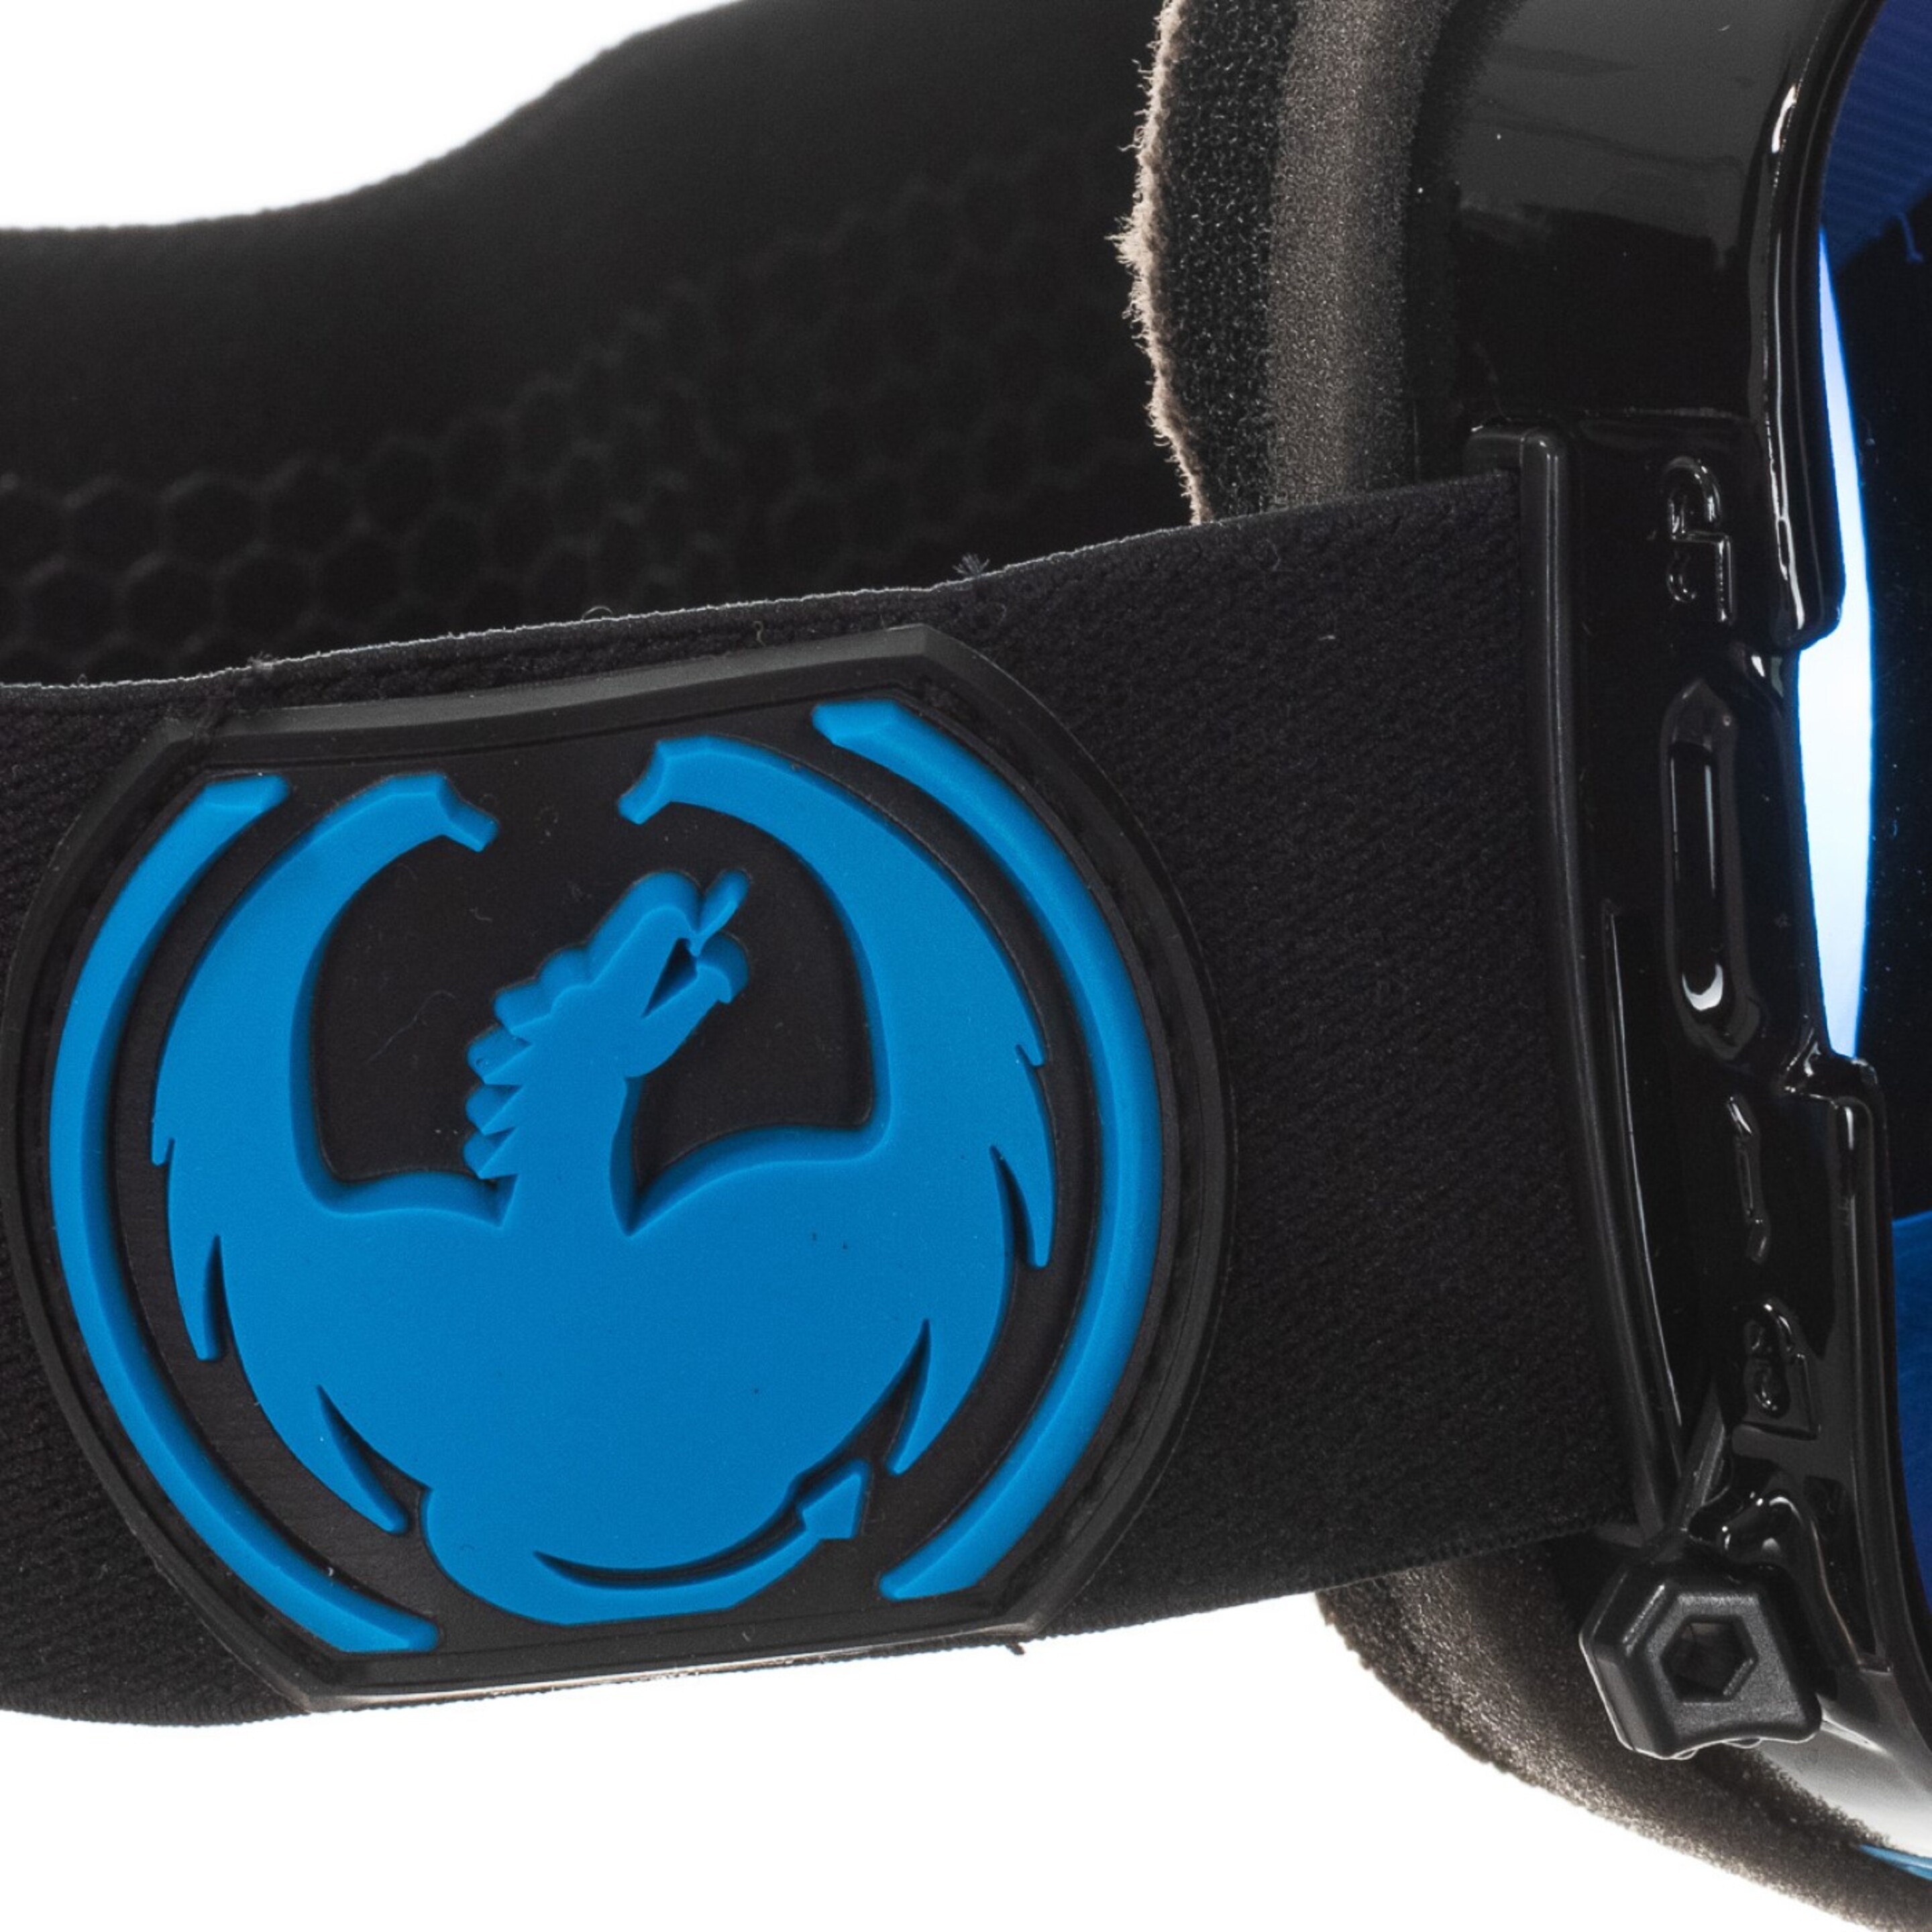 Gafas De Snowboard Dragon Alliance Nfx X2